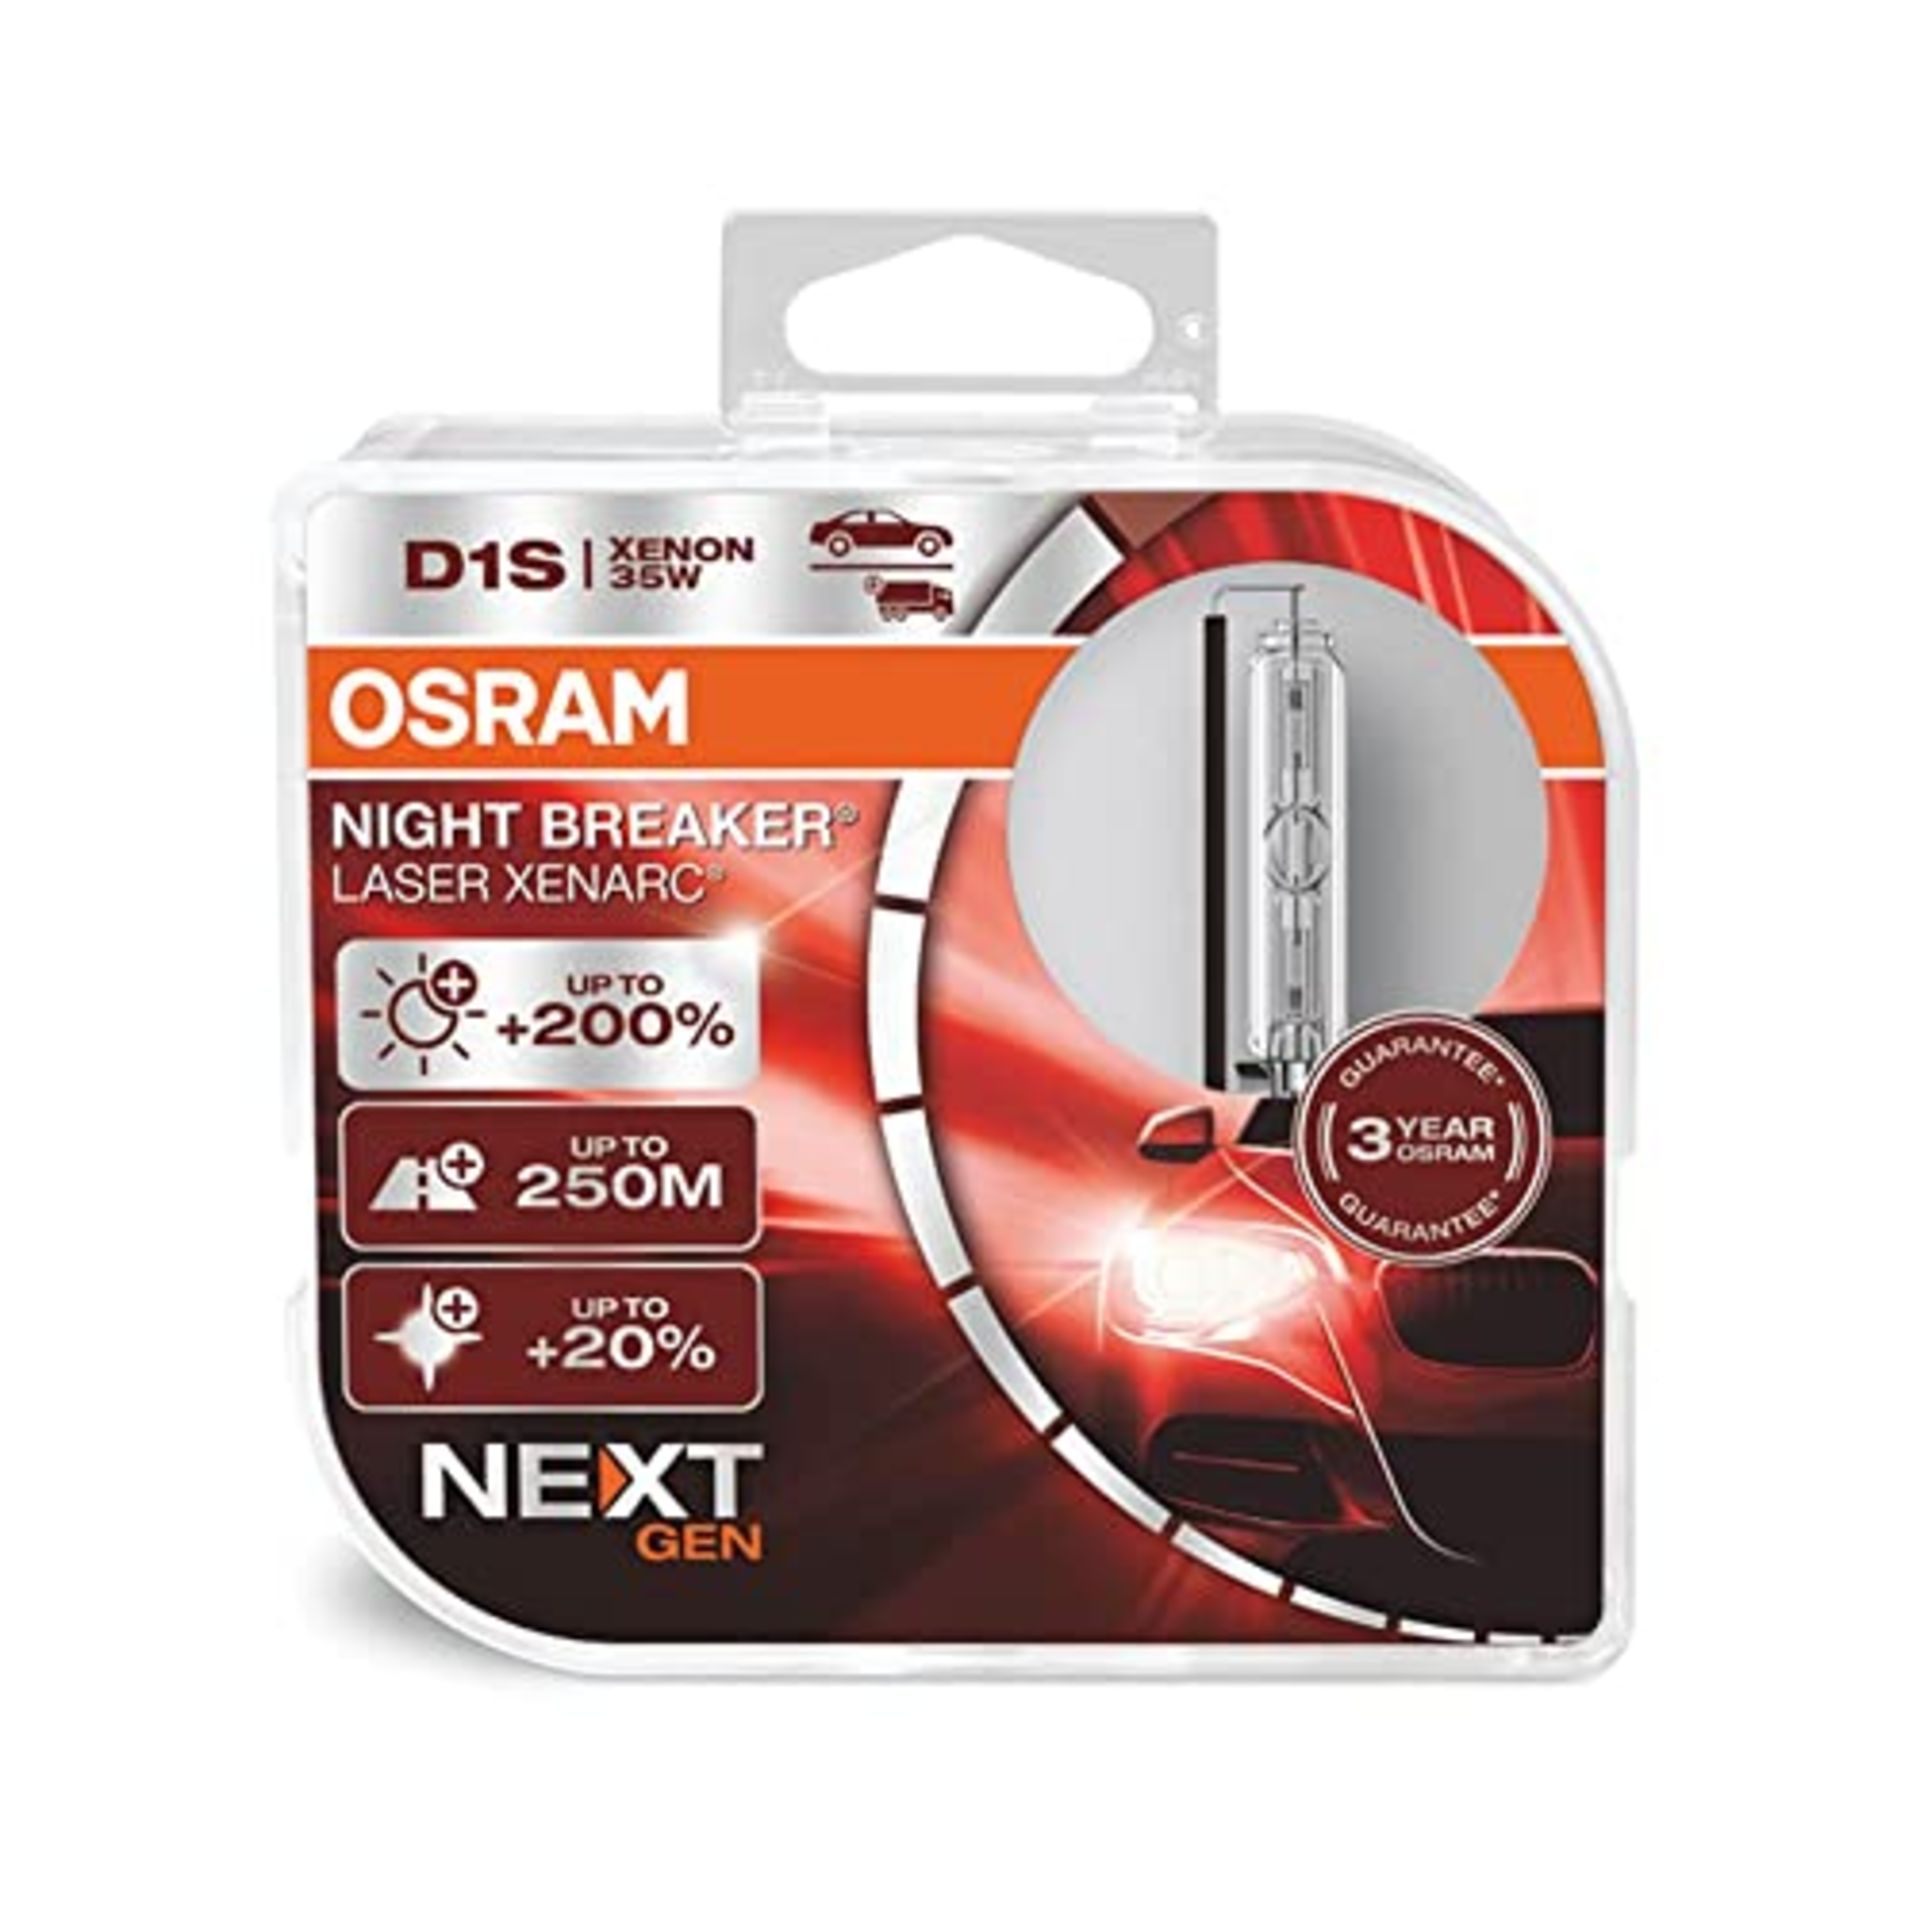 RRP £124.00 OSRAM XENARC NIGHT BREAKER LASER D1S, Next Generation, 200% more brightness, HID xenon